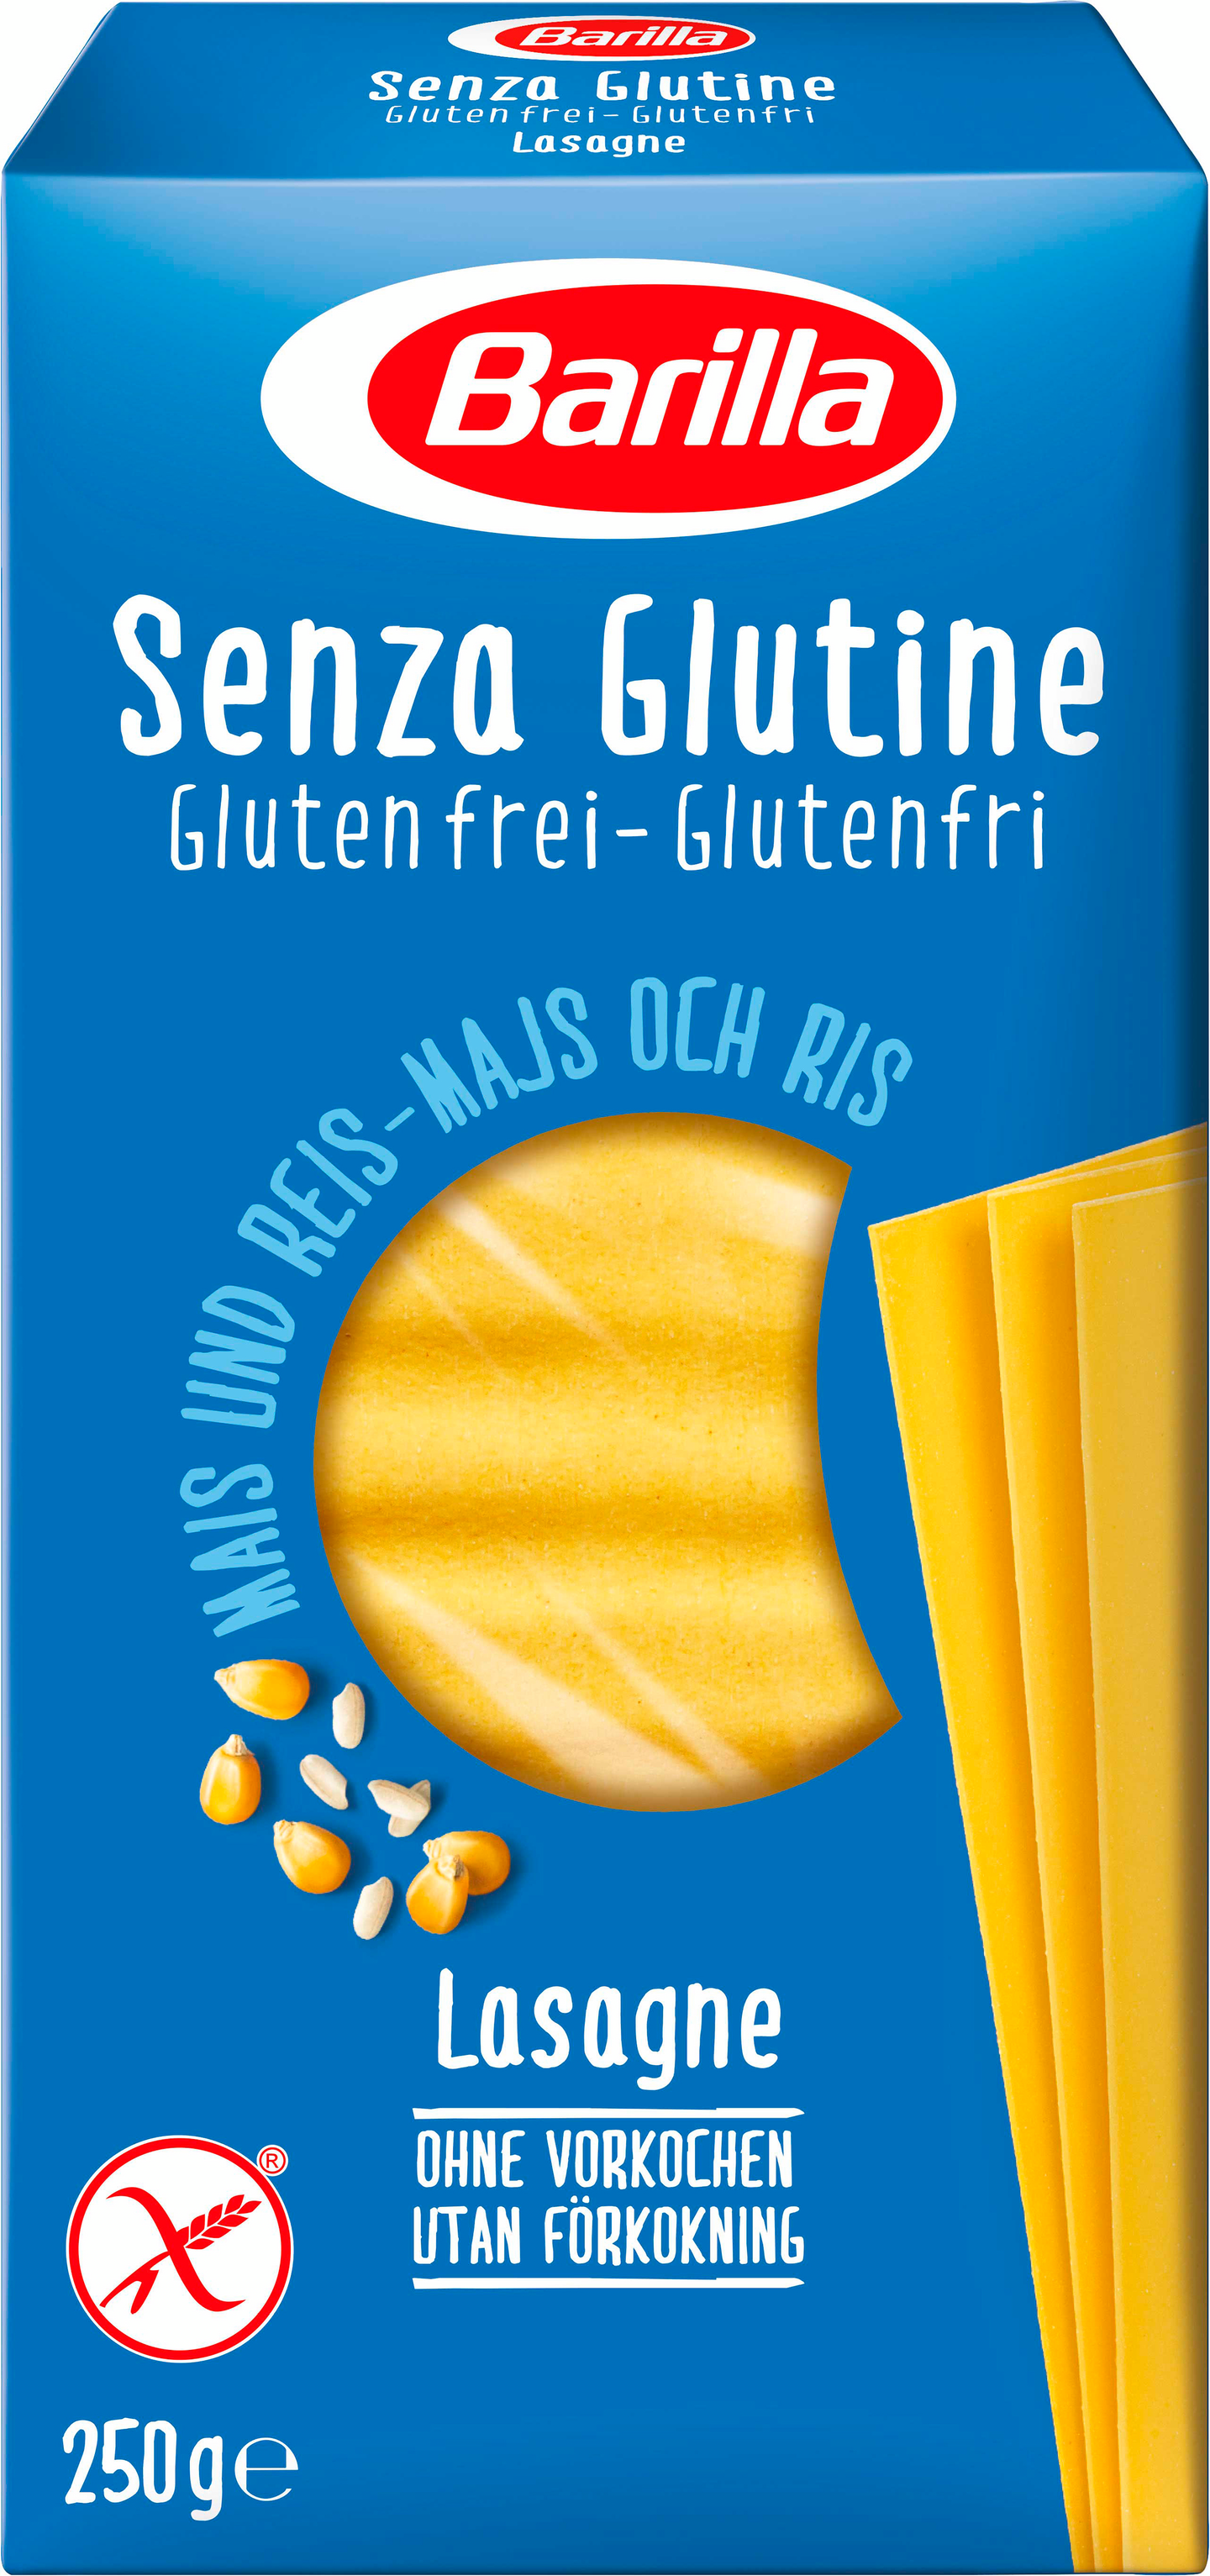 Barilla Gluteeniton Lasagne 250g — HoReCa-tukku Kespro